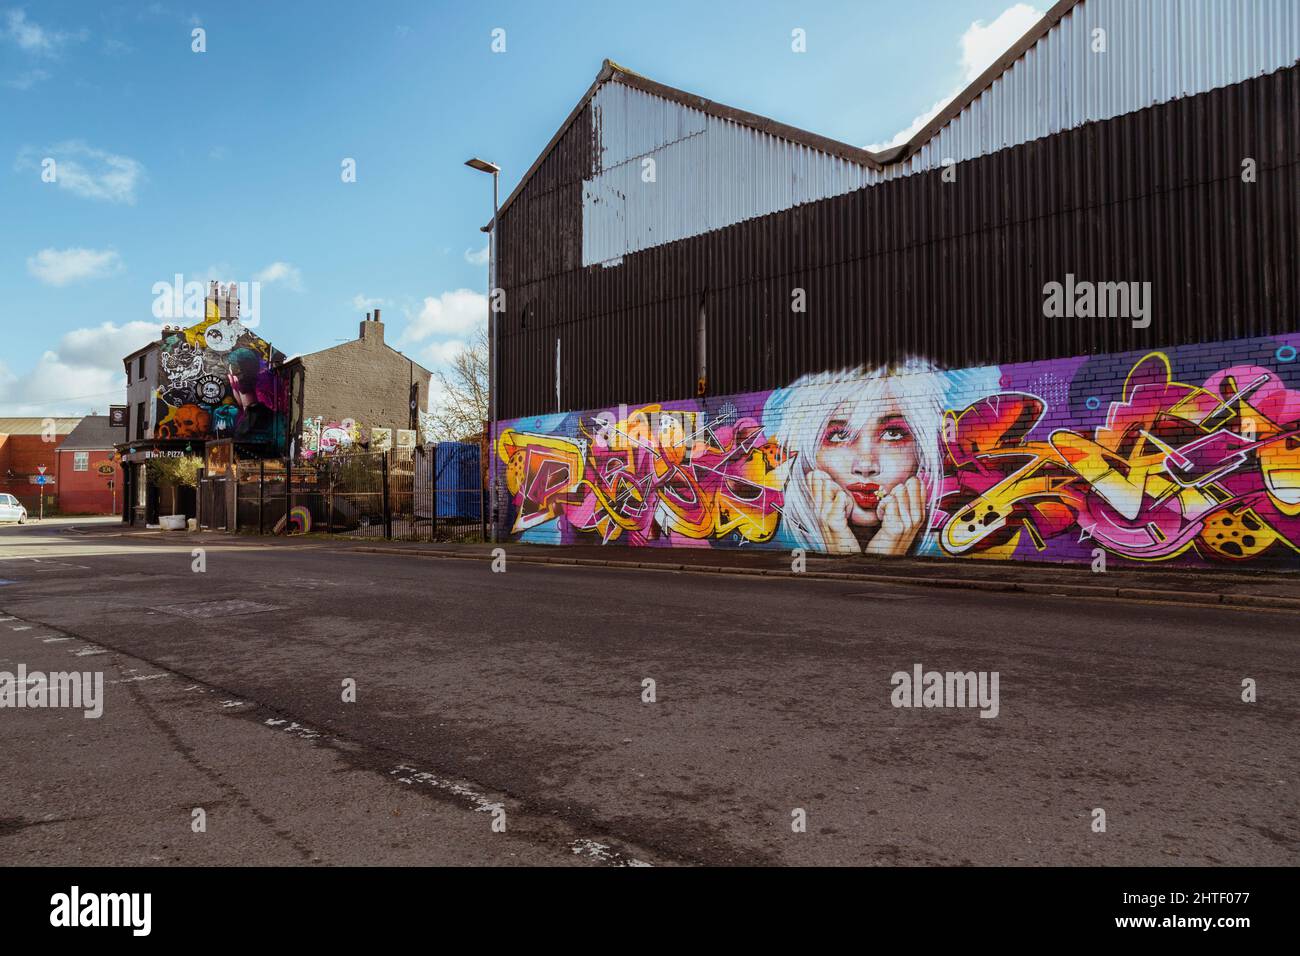 Vibrant Street Art Graces A Wall In Digbeth Birmingham On The Corner